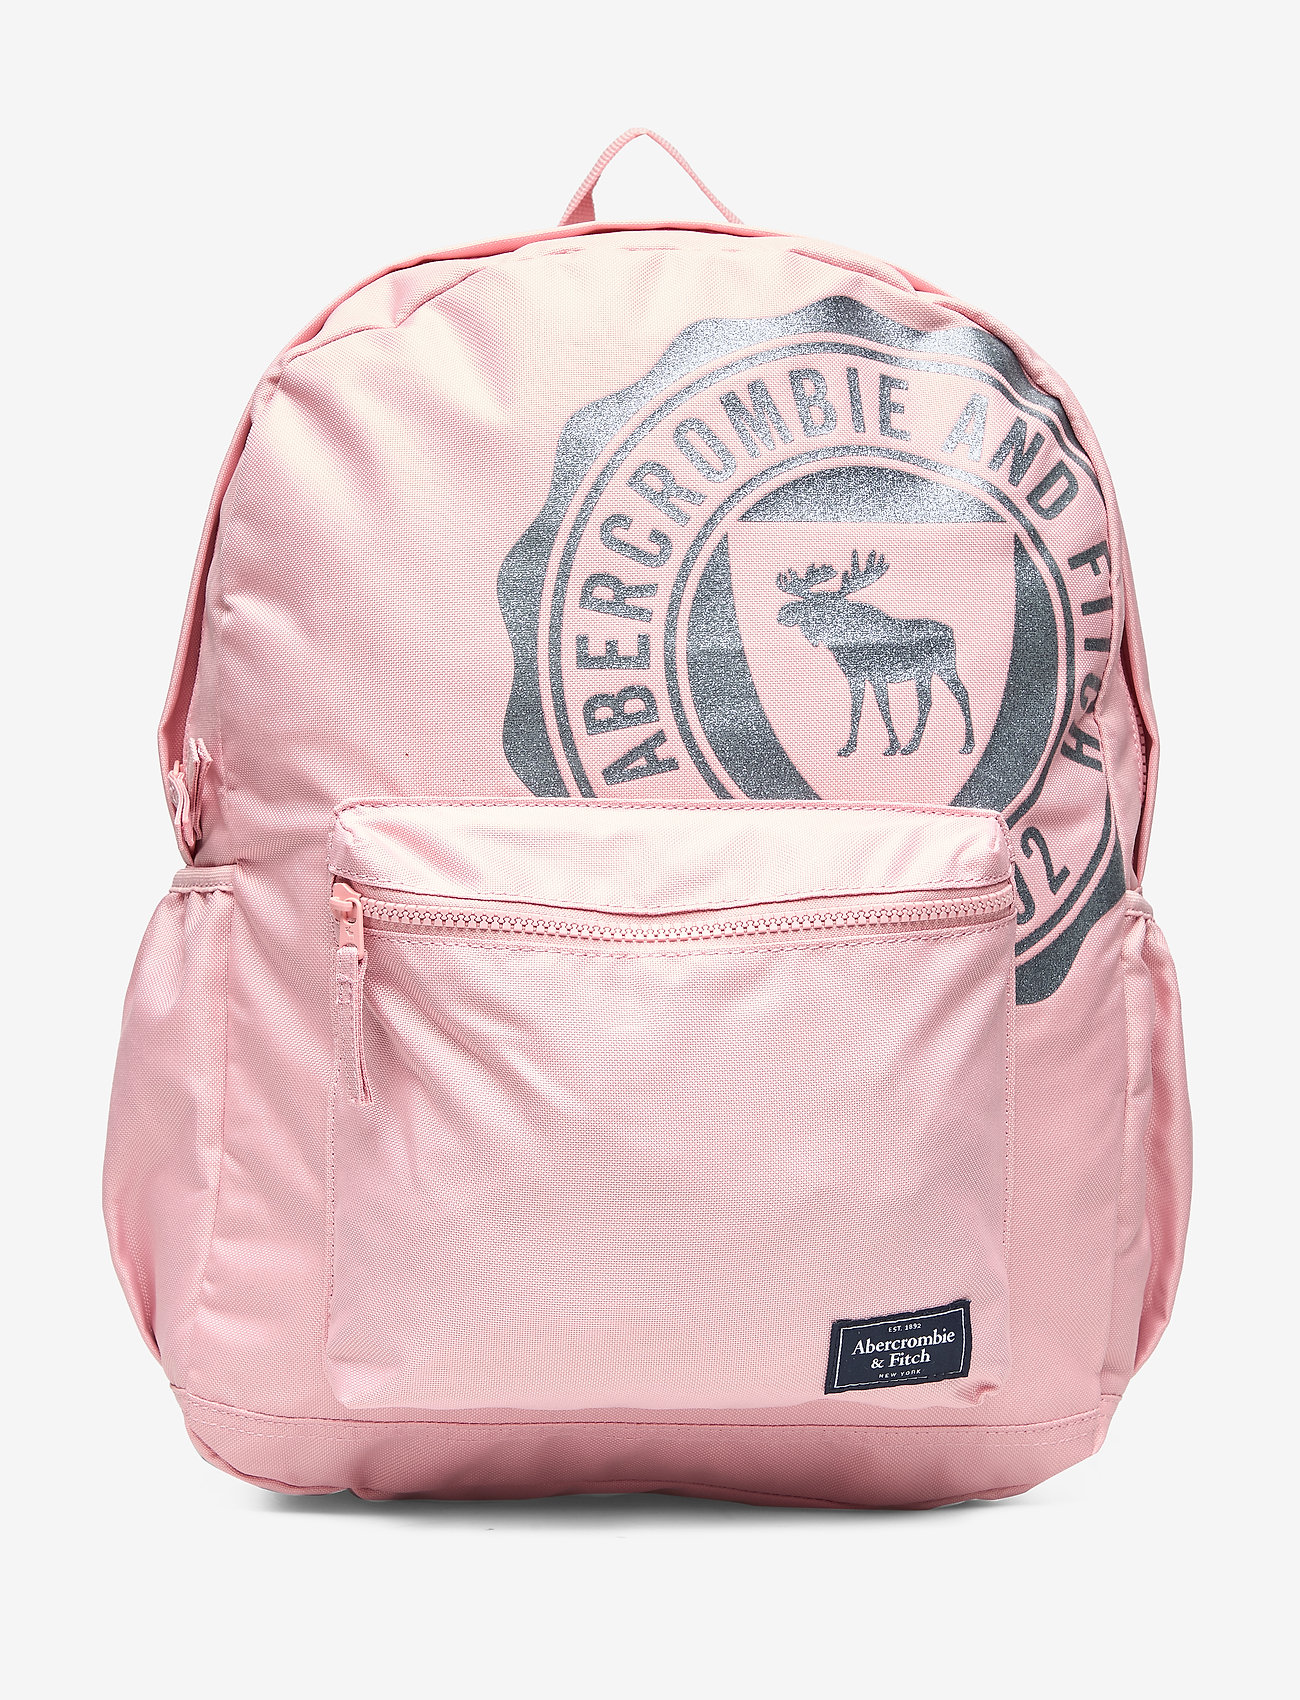 abercrombie kids backpack